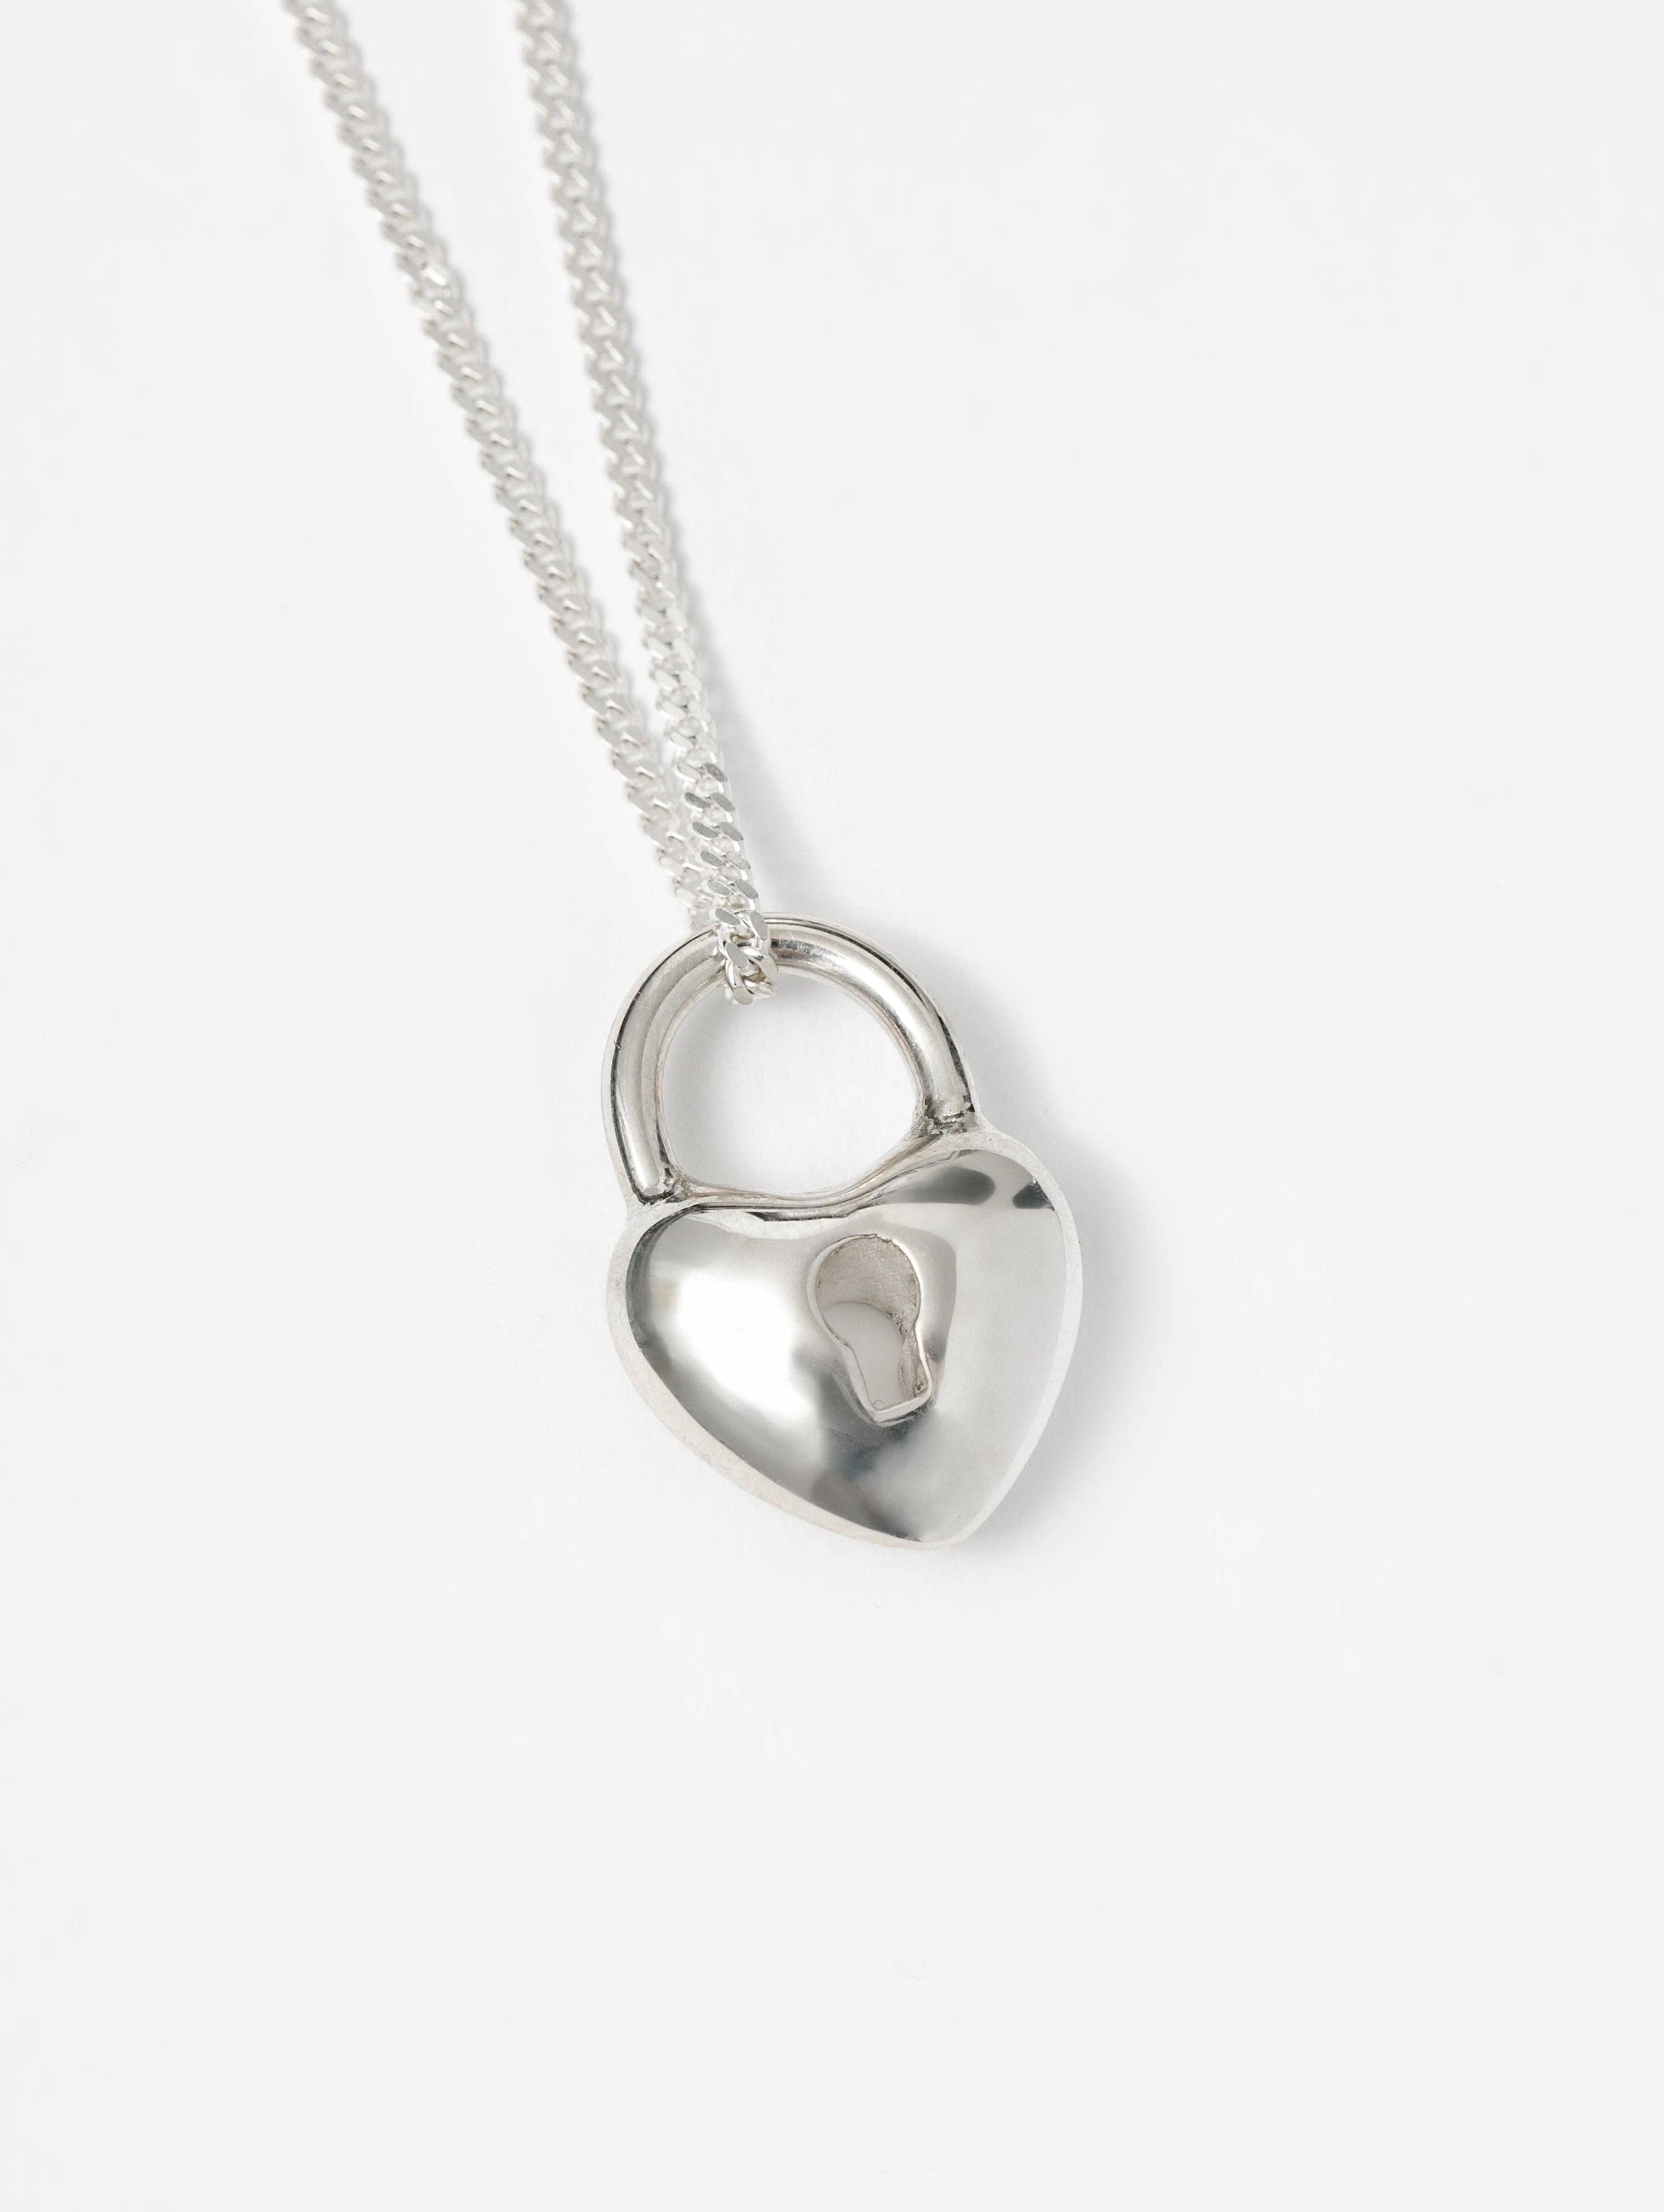 Heart Locket Necklace, Sterling Silver